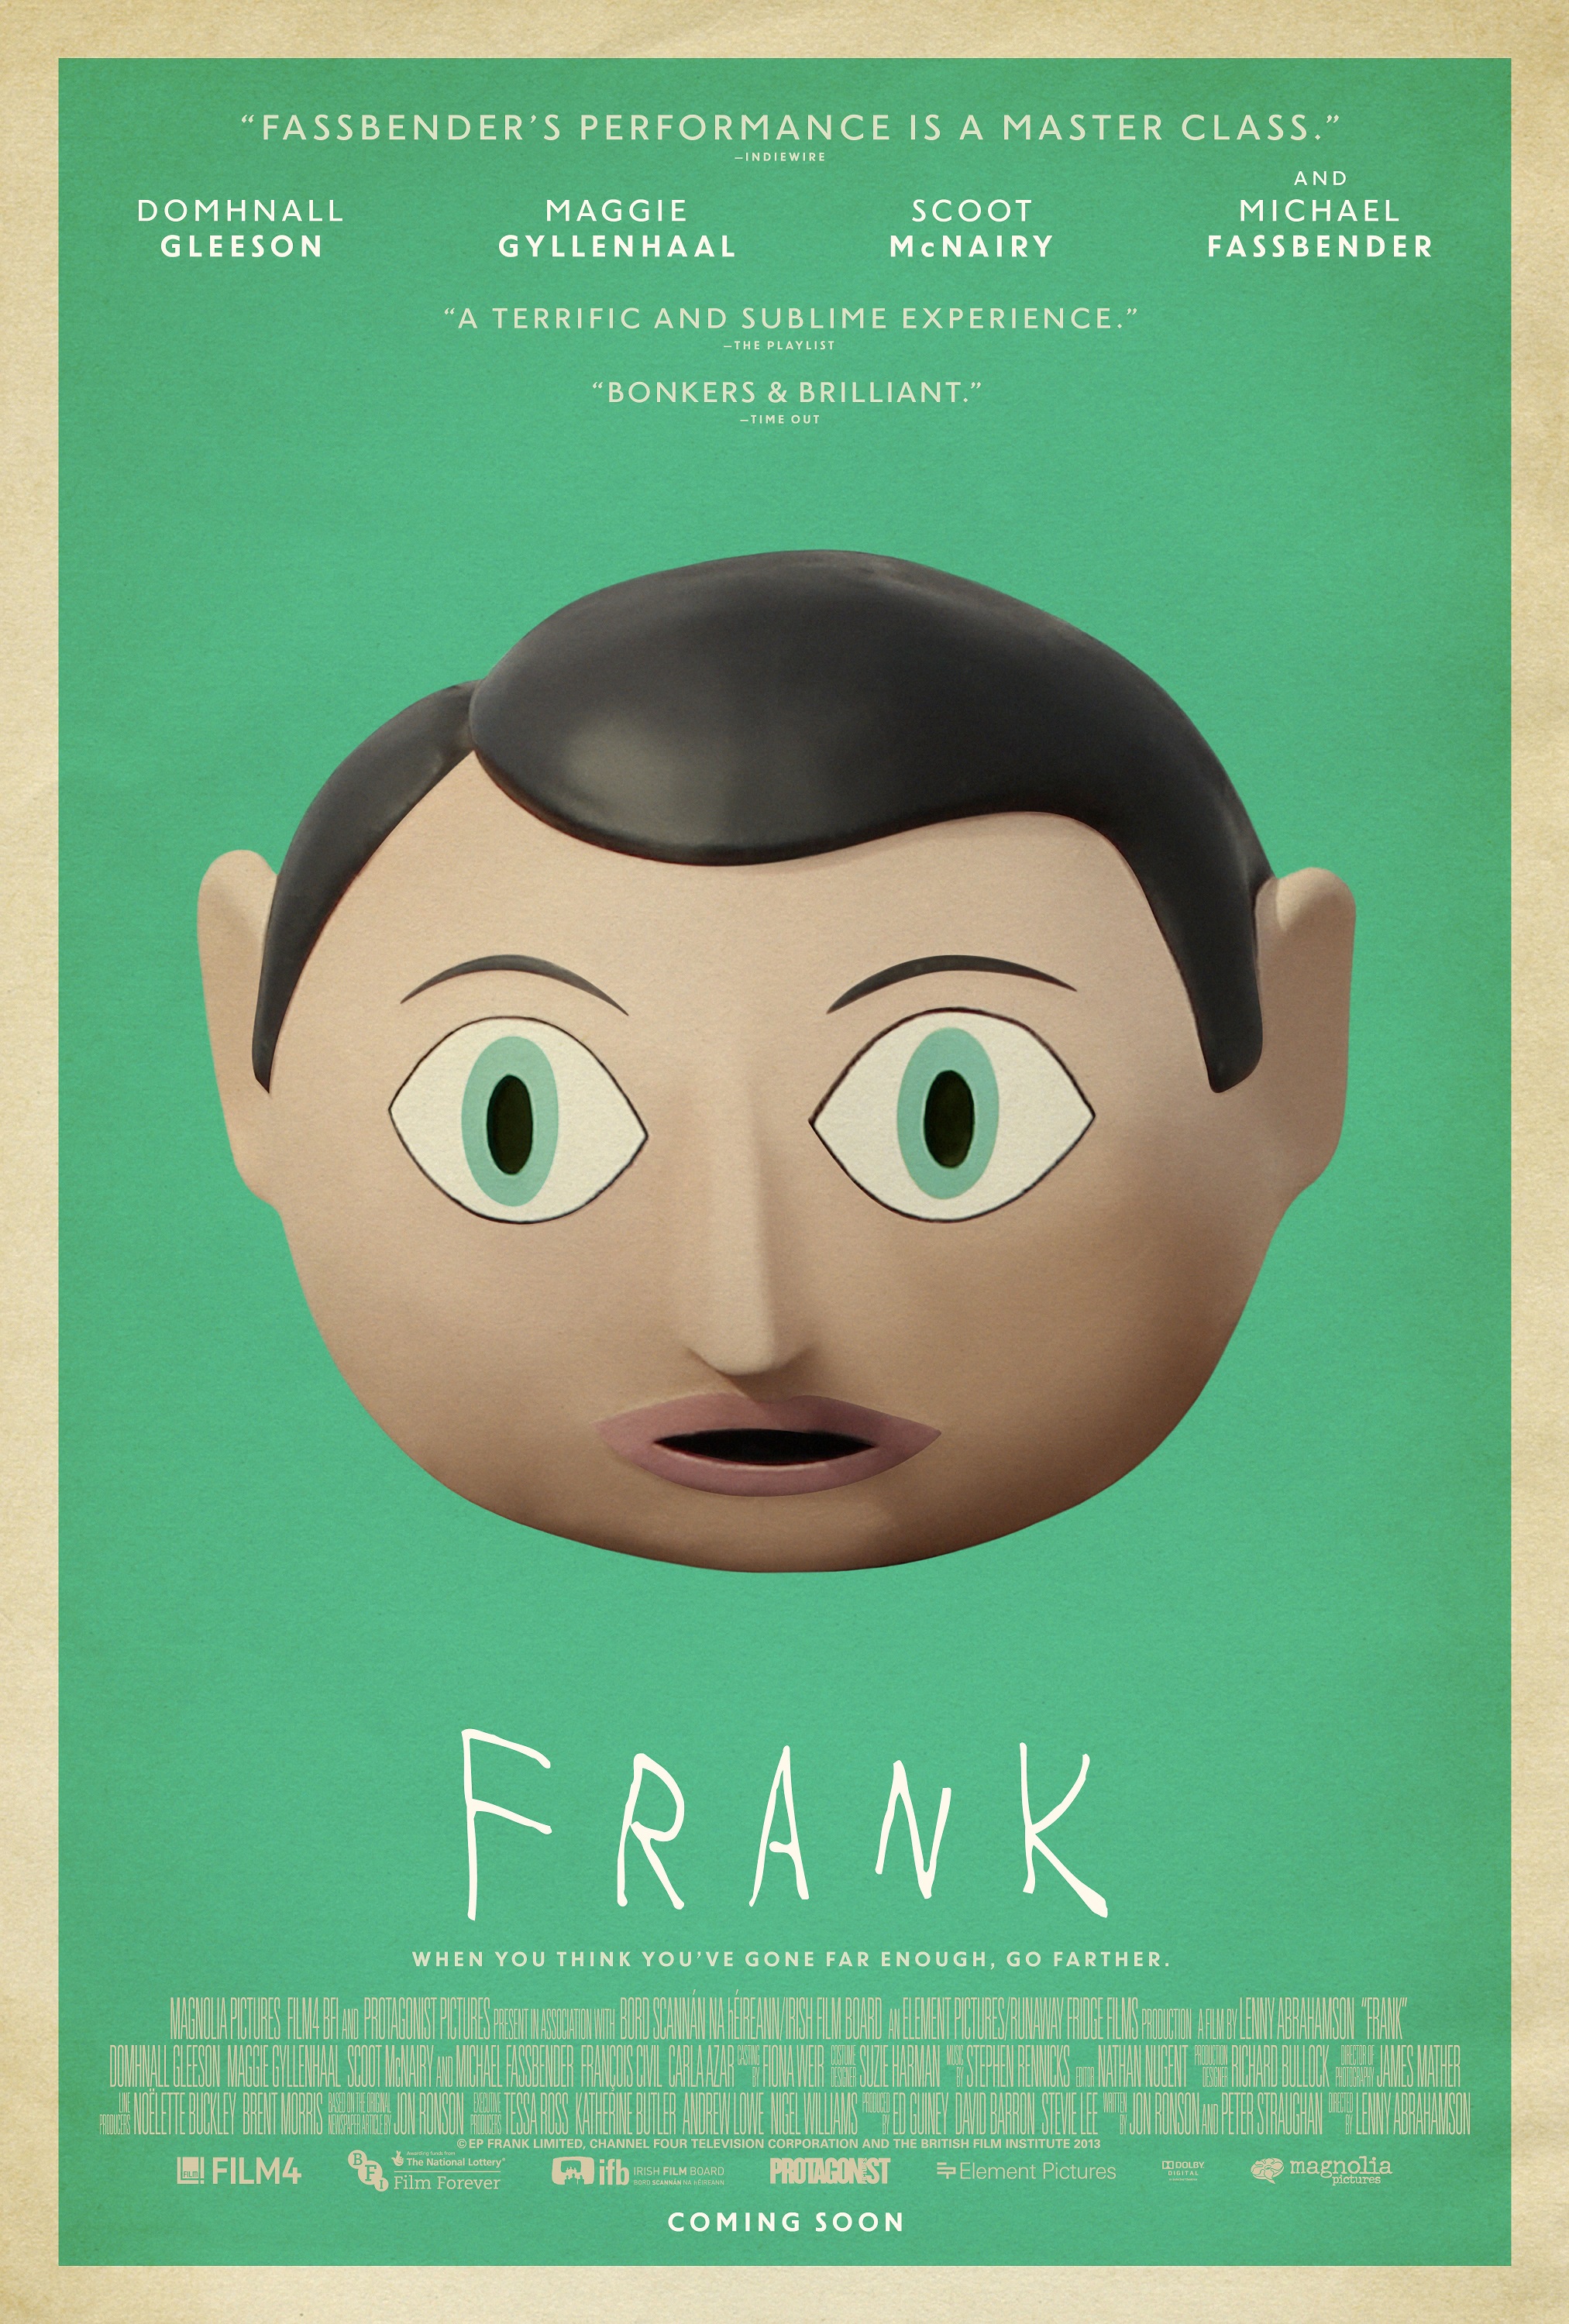 FRANK-Official Poster Banner PROMO XLG-23JUNHO2014